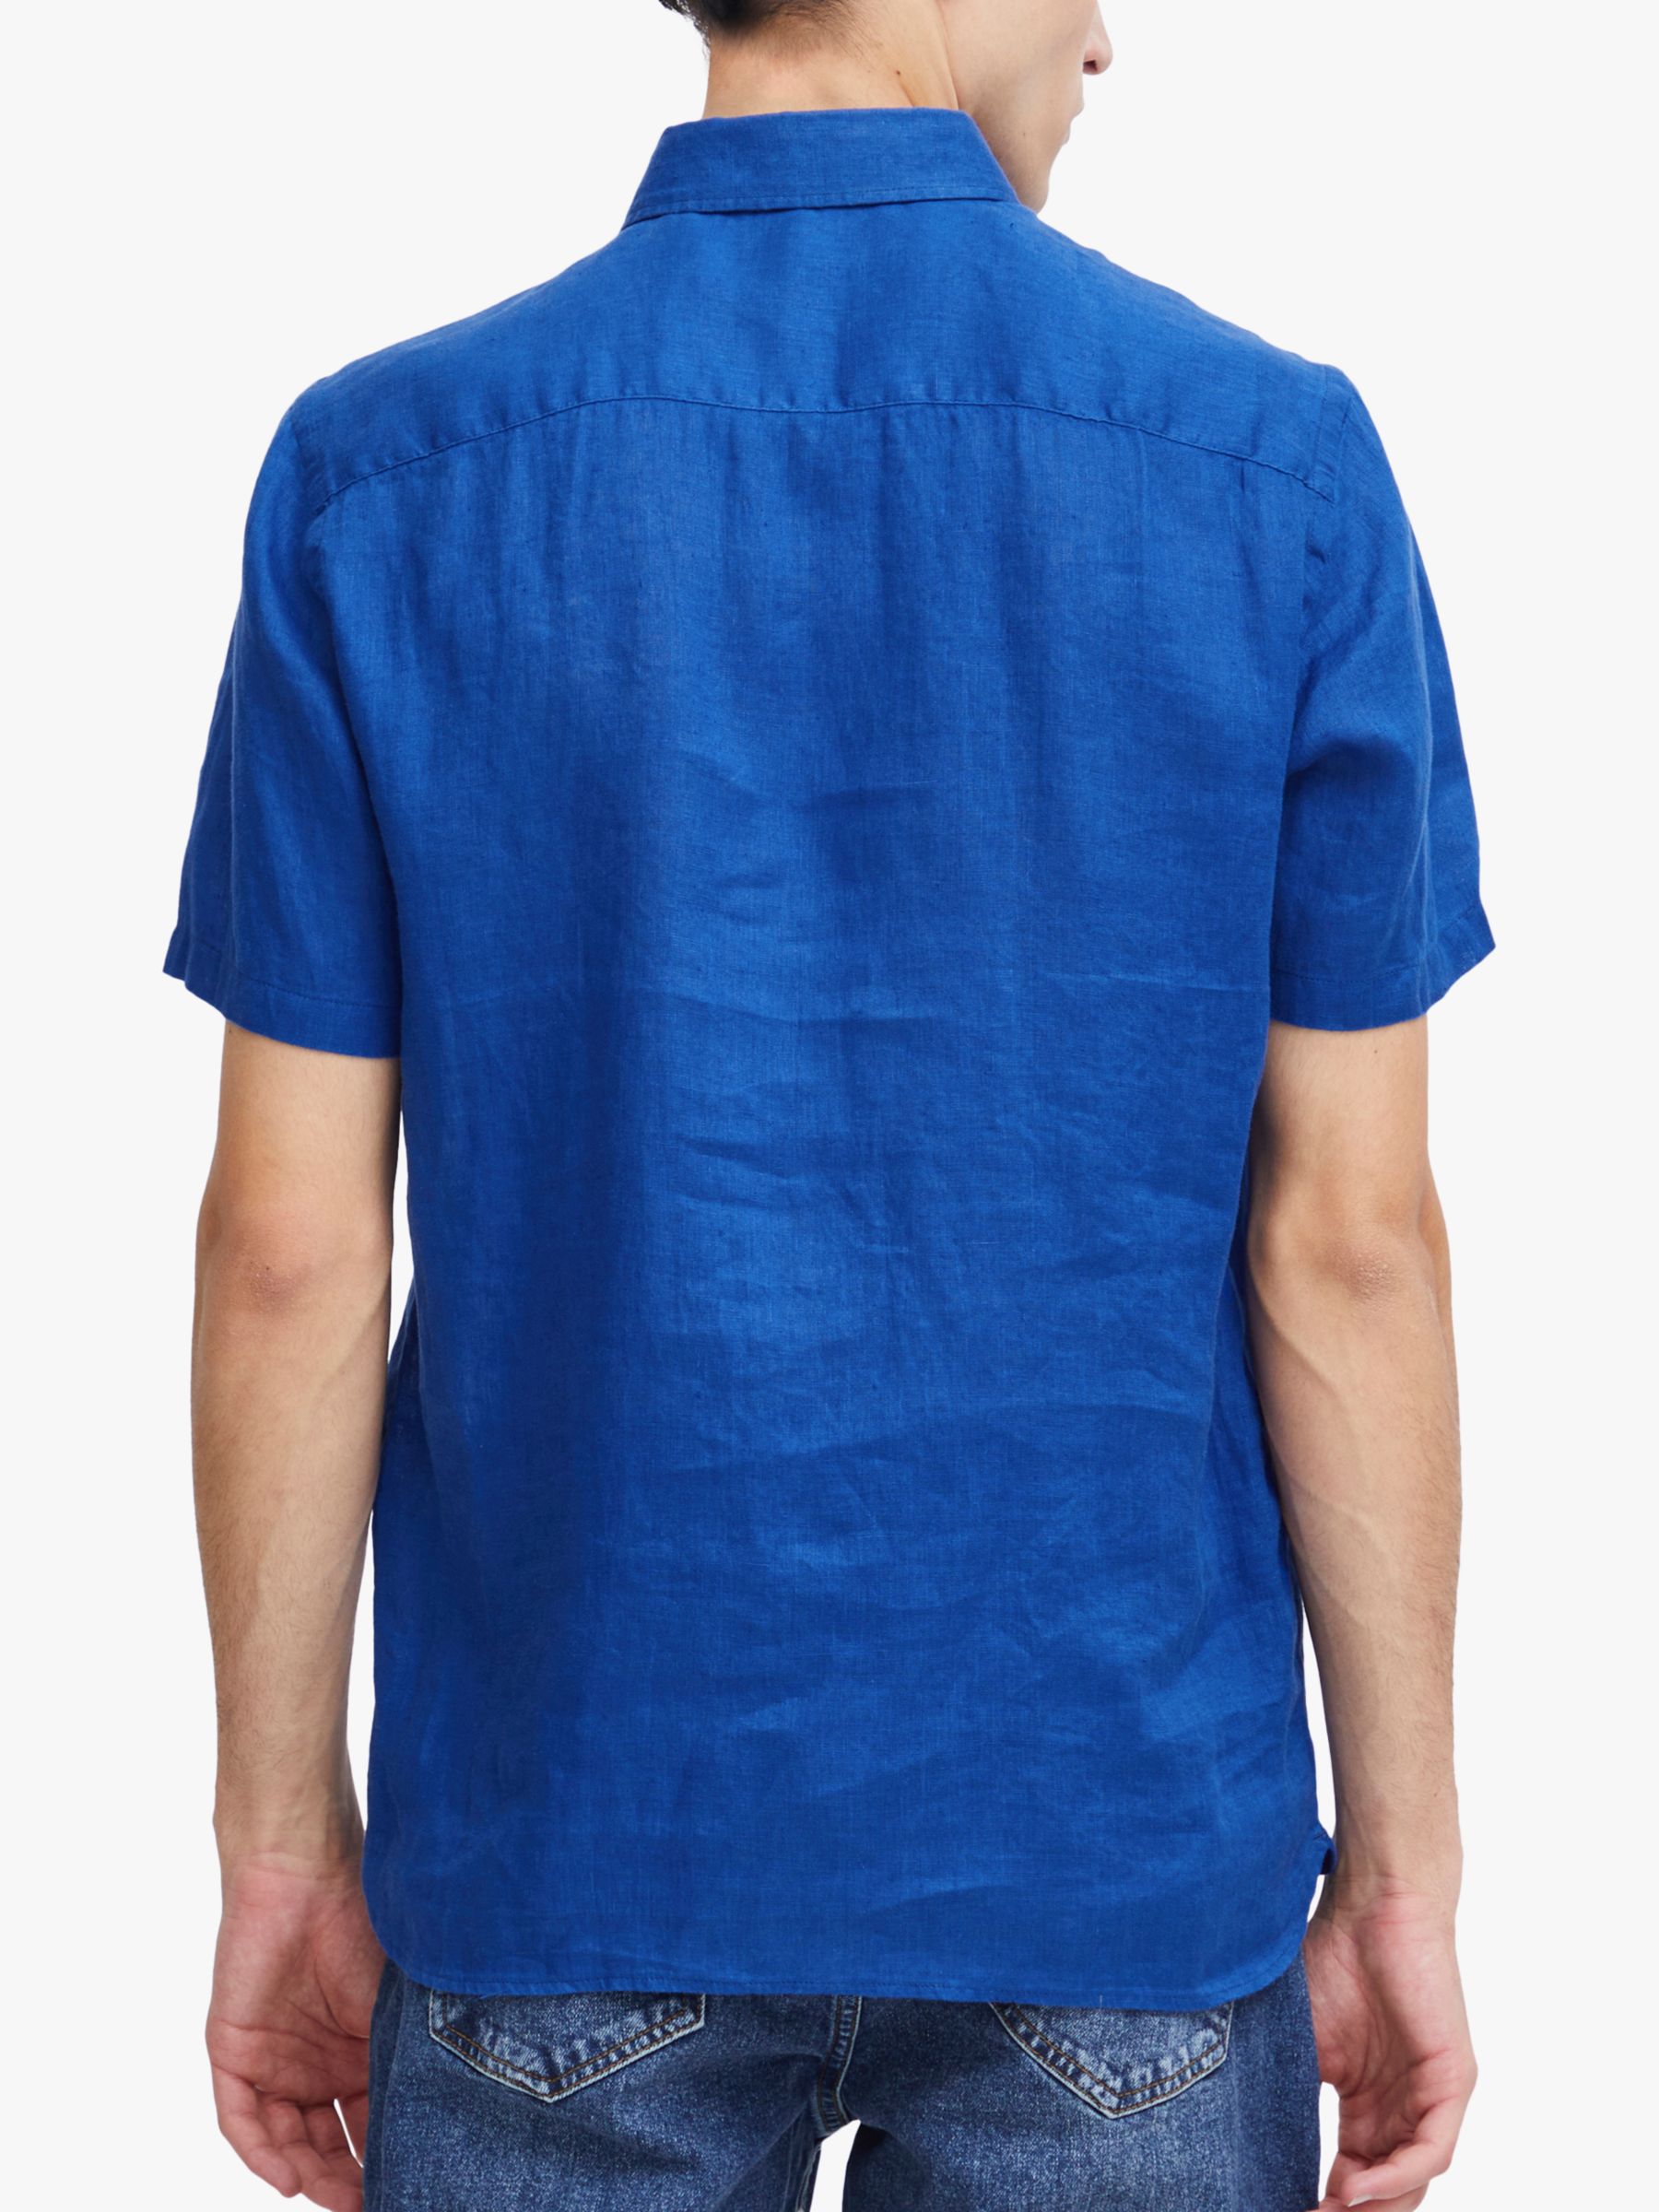 Casual Friday Anton Short Sleeve Linen Shirt, Mazarine Blue, S